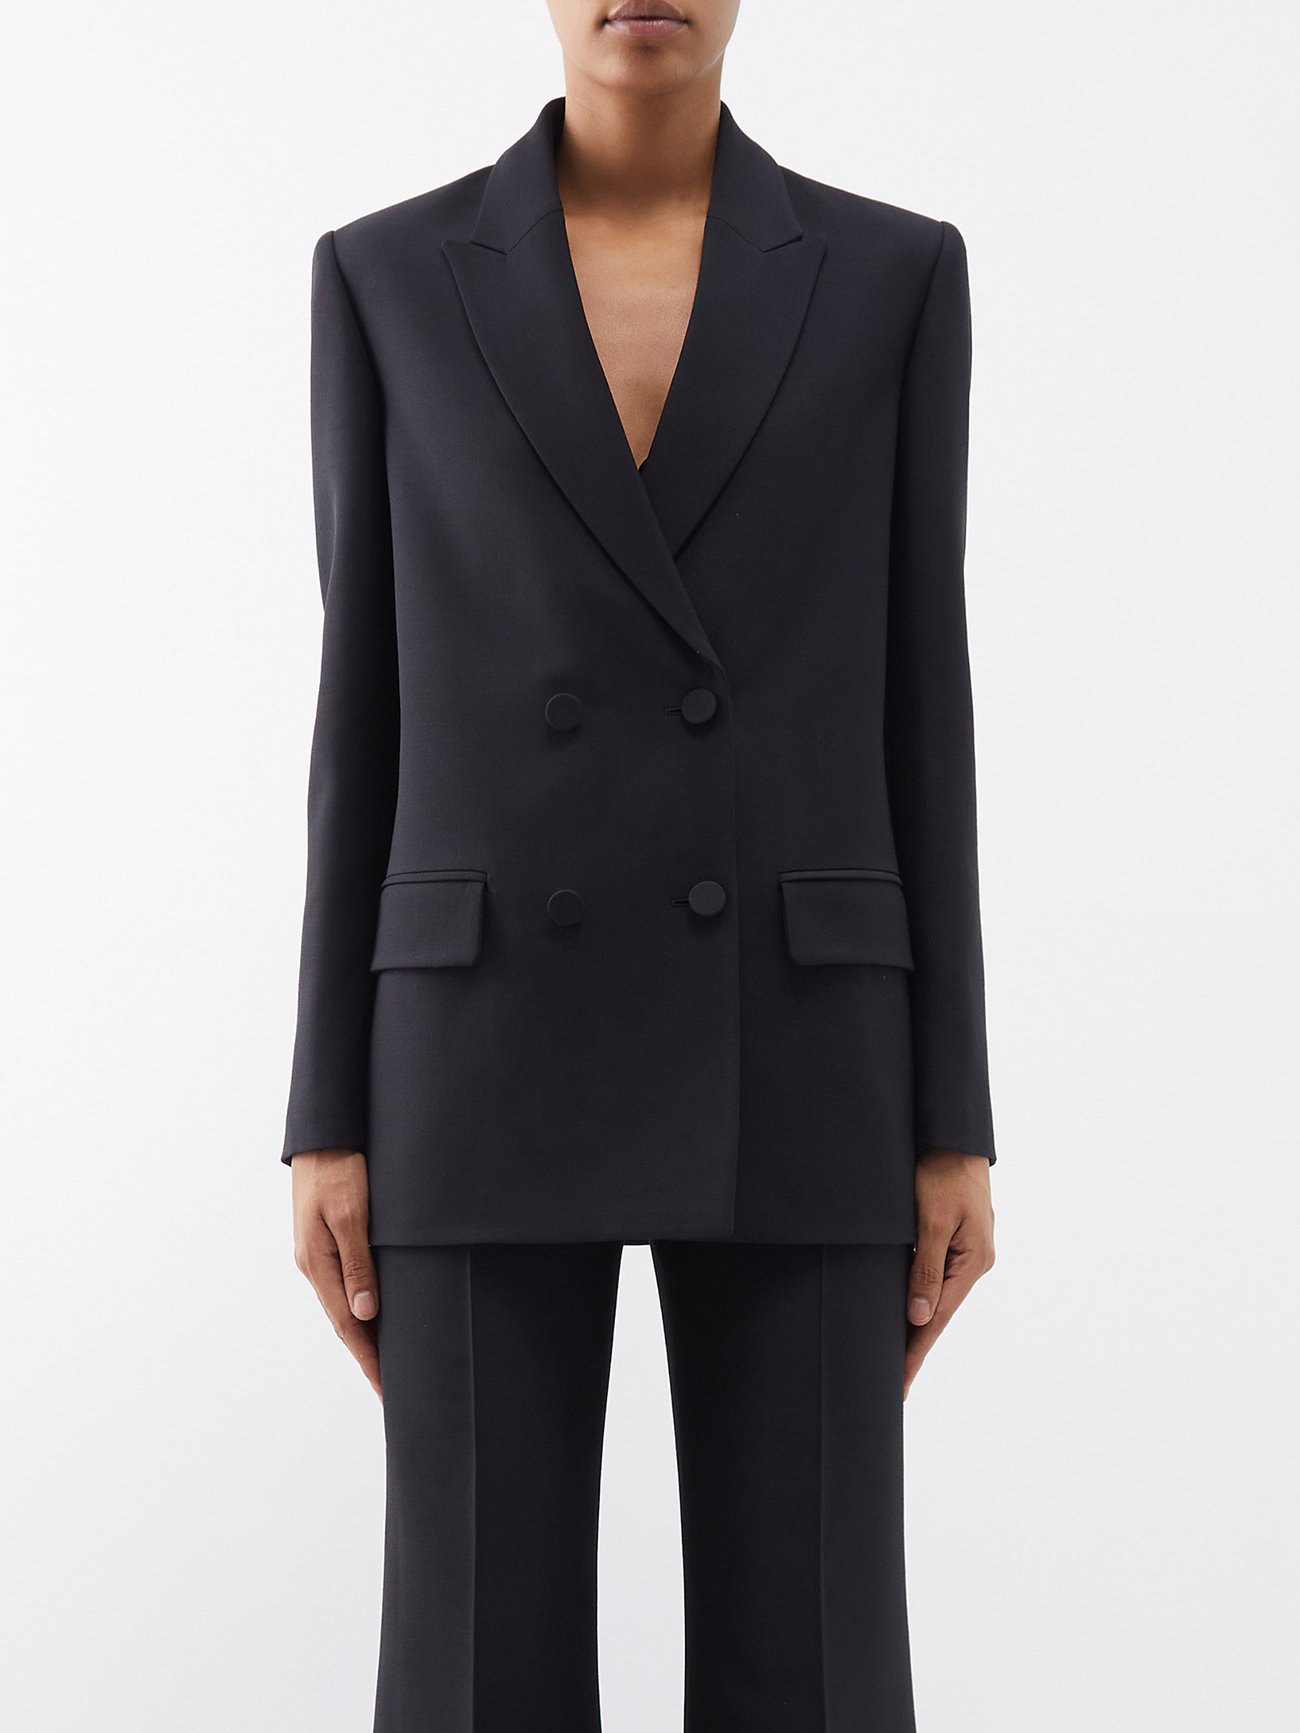 Black Crepe Couture oblique-front tailored jacket | Valentino Garavani ...